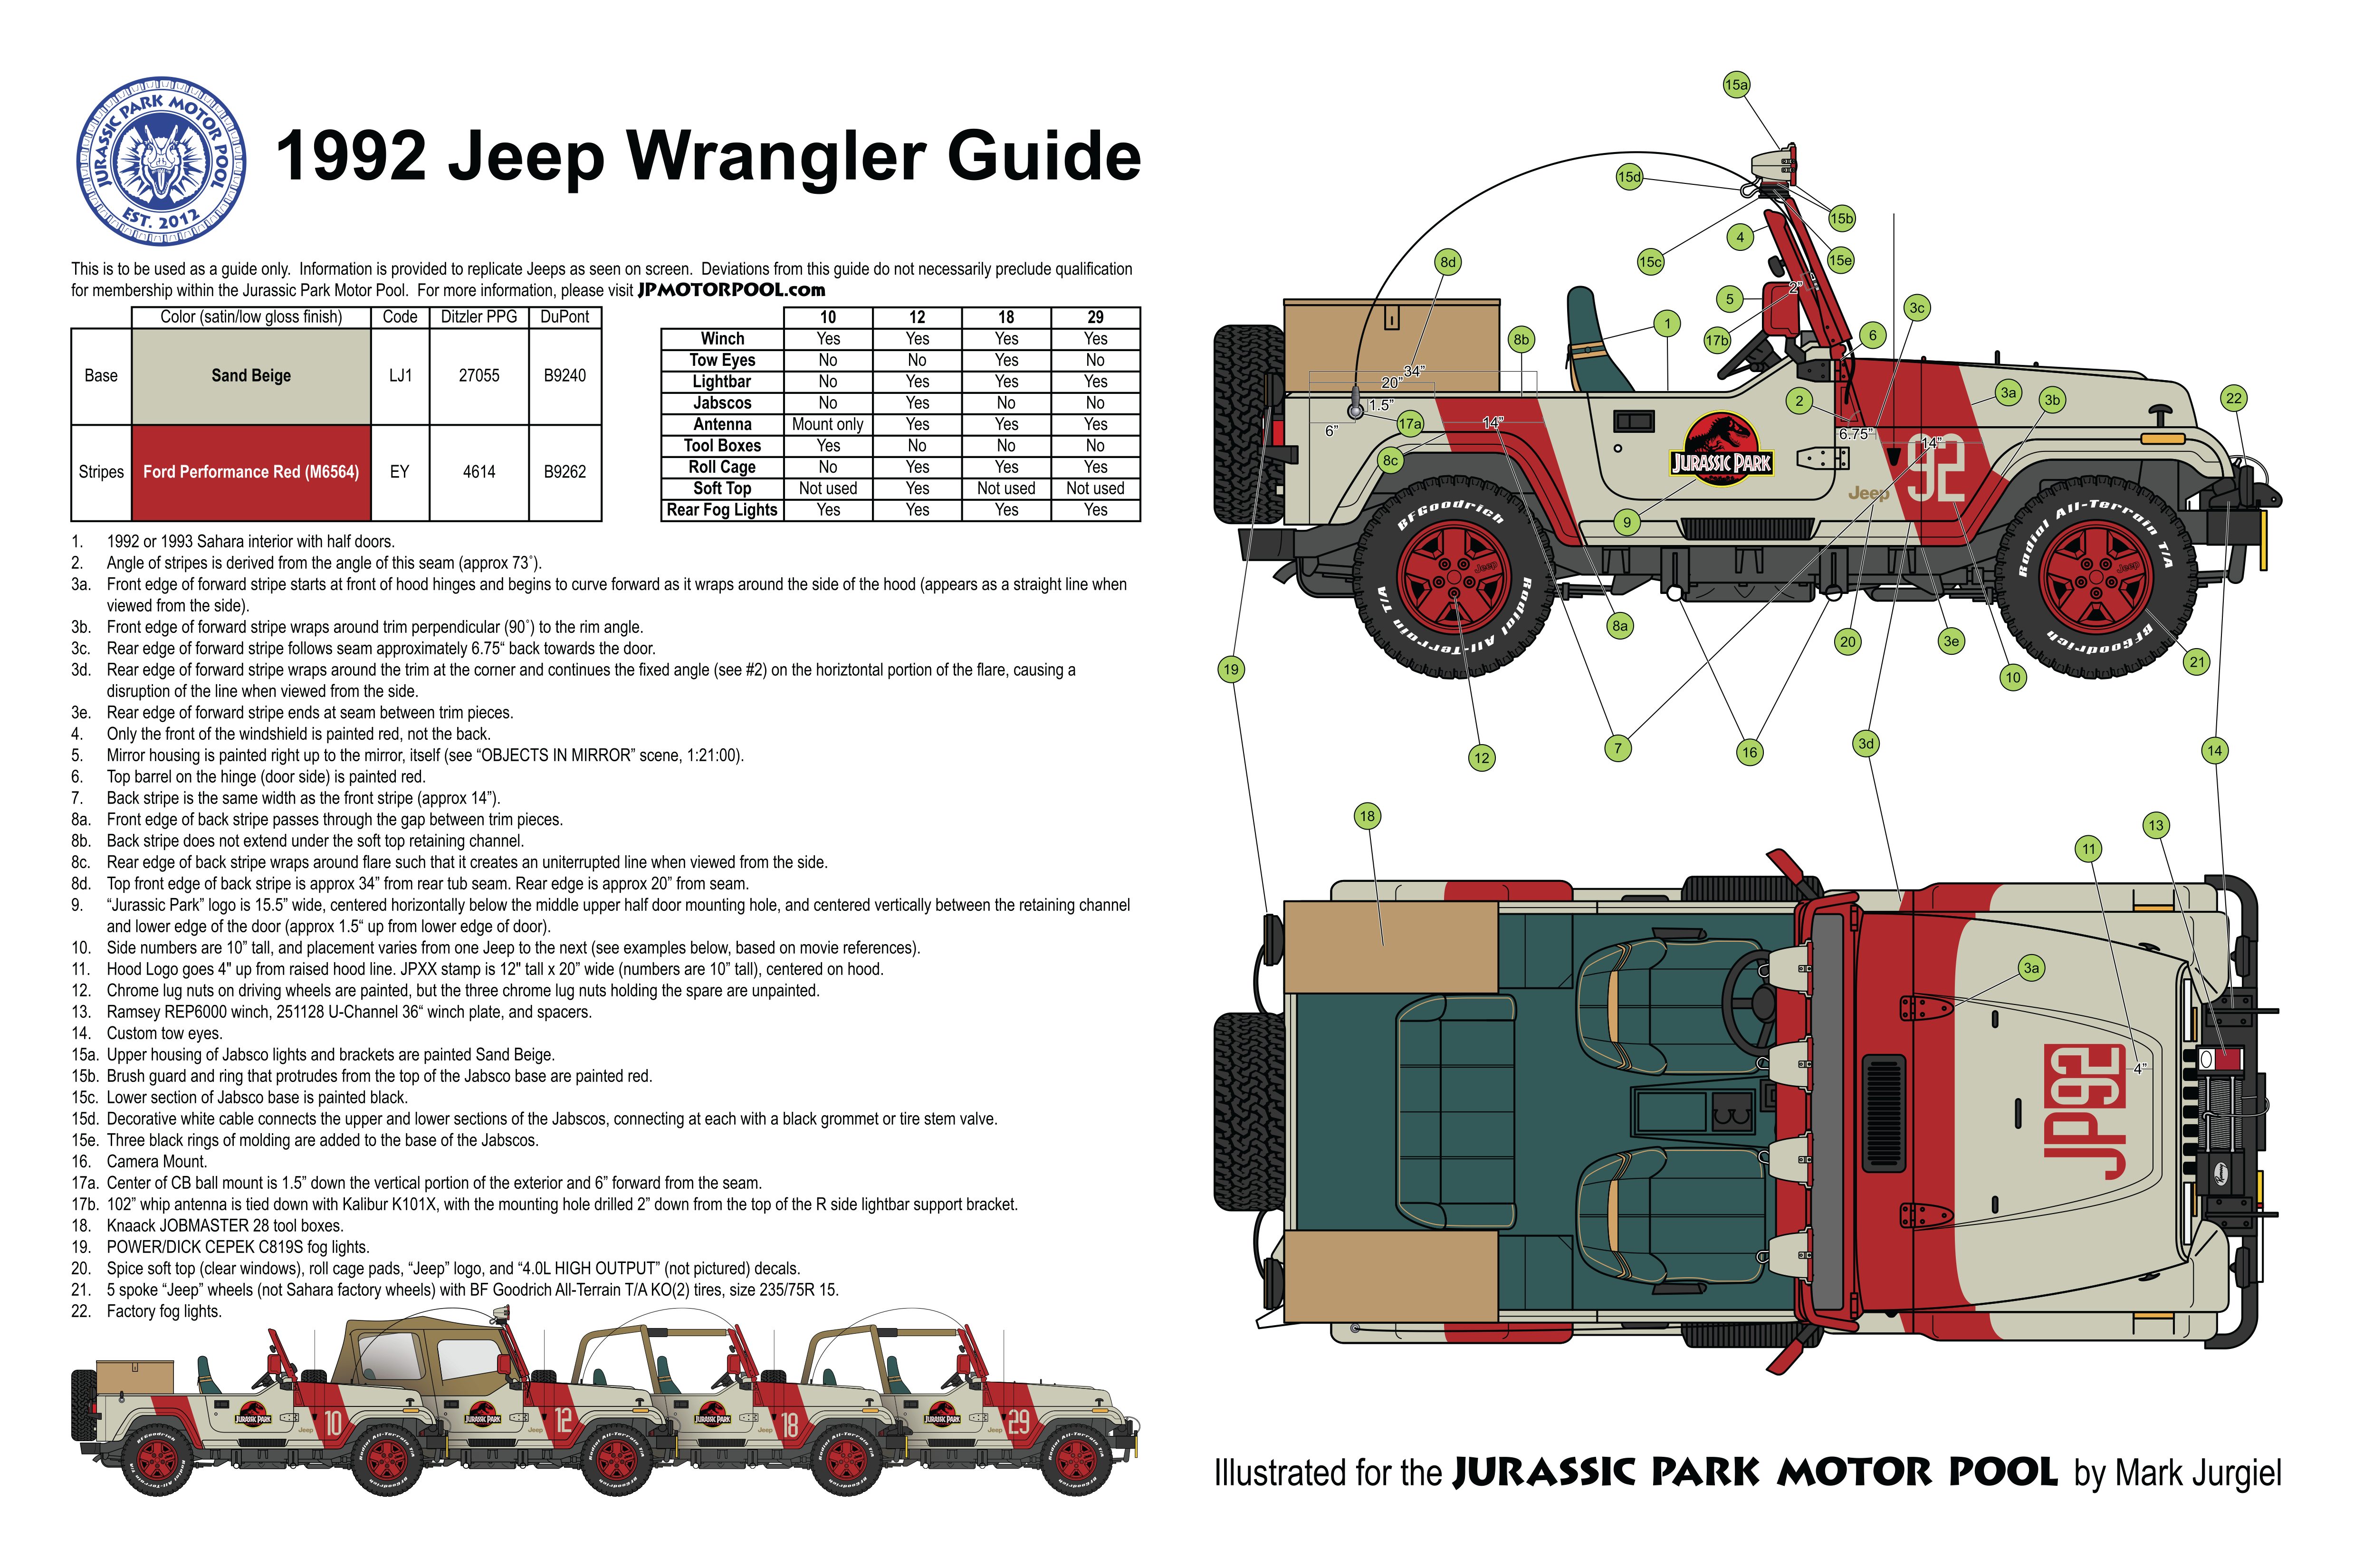 Reference Jeep Wrangler Guide Jurassic Park Motor Pool